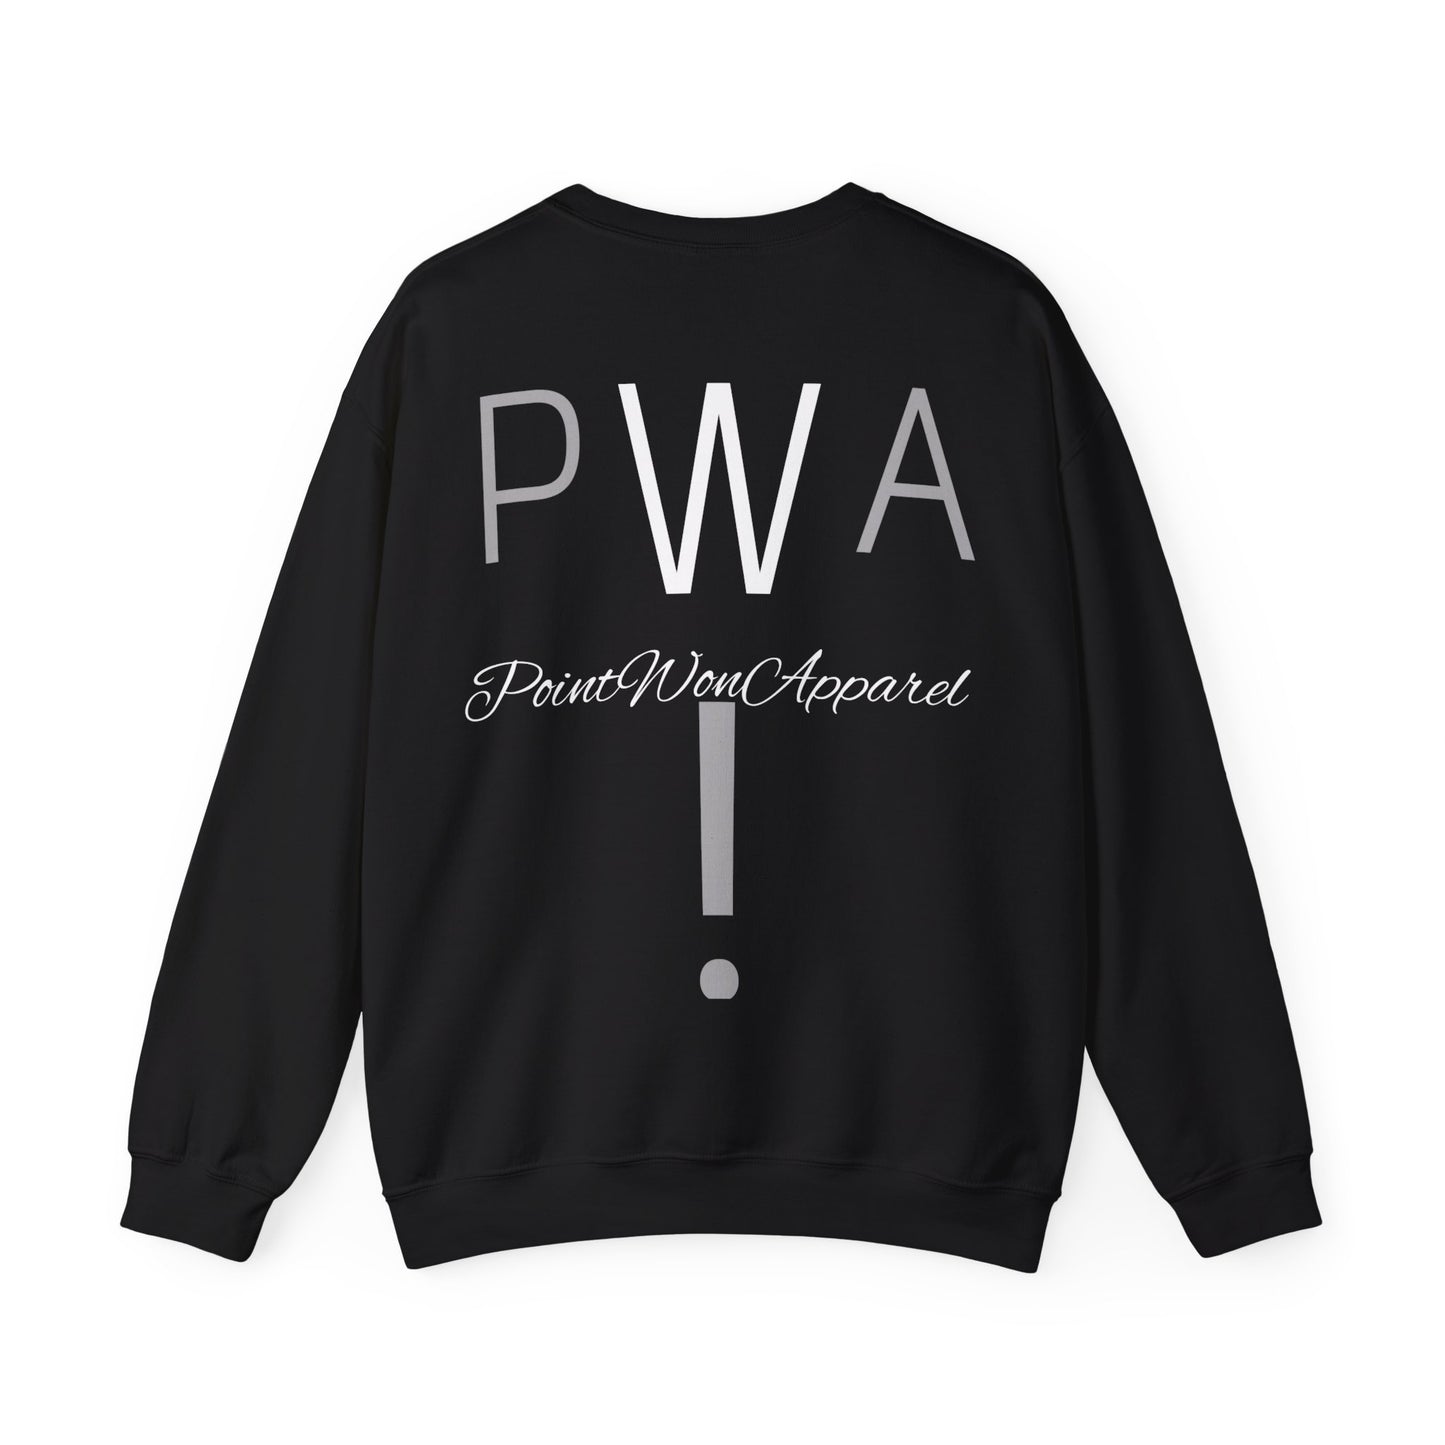 PointWonApparel Unisex Heavy Blend™ Crewneck Sweatshirt